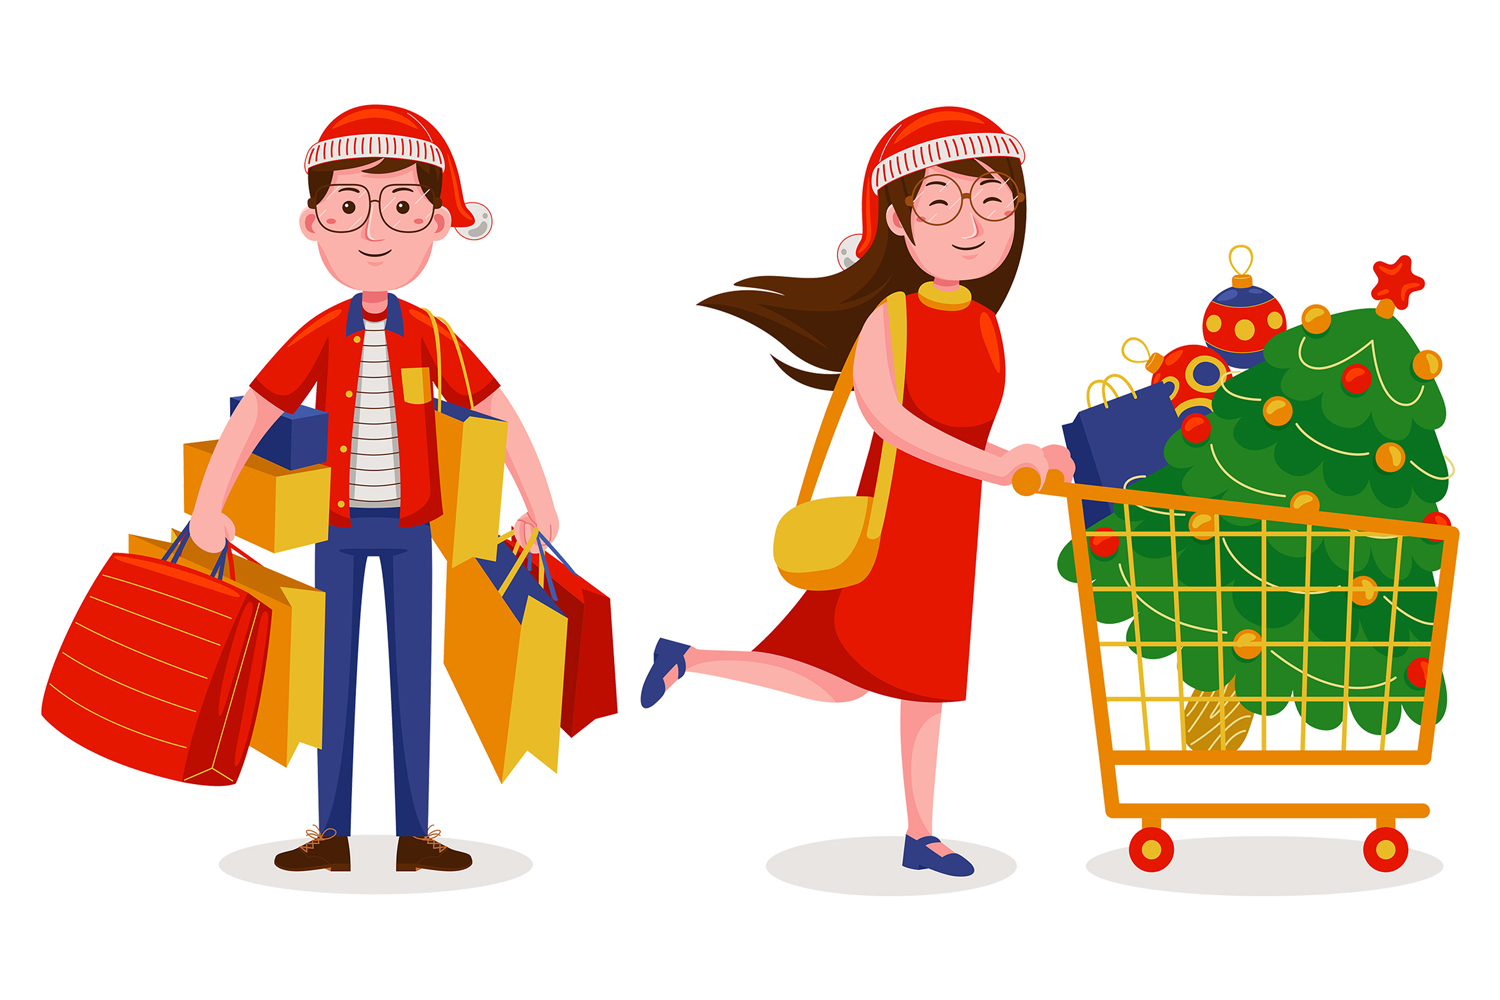 Christmas Shopping Vector Illustration #01